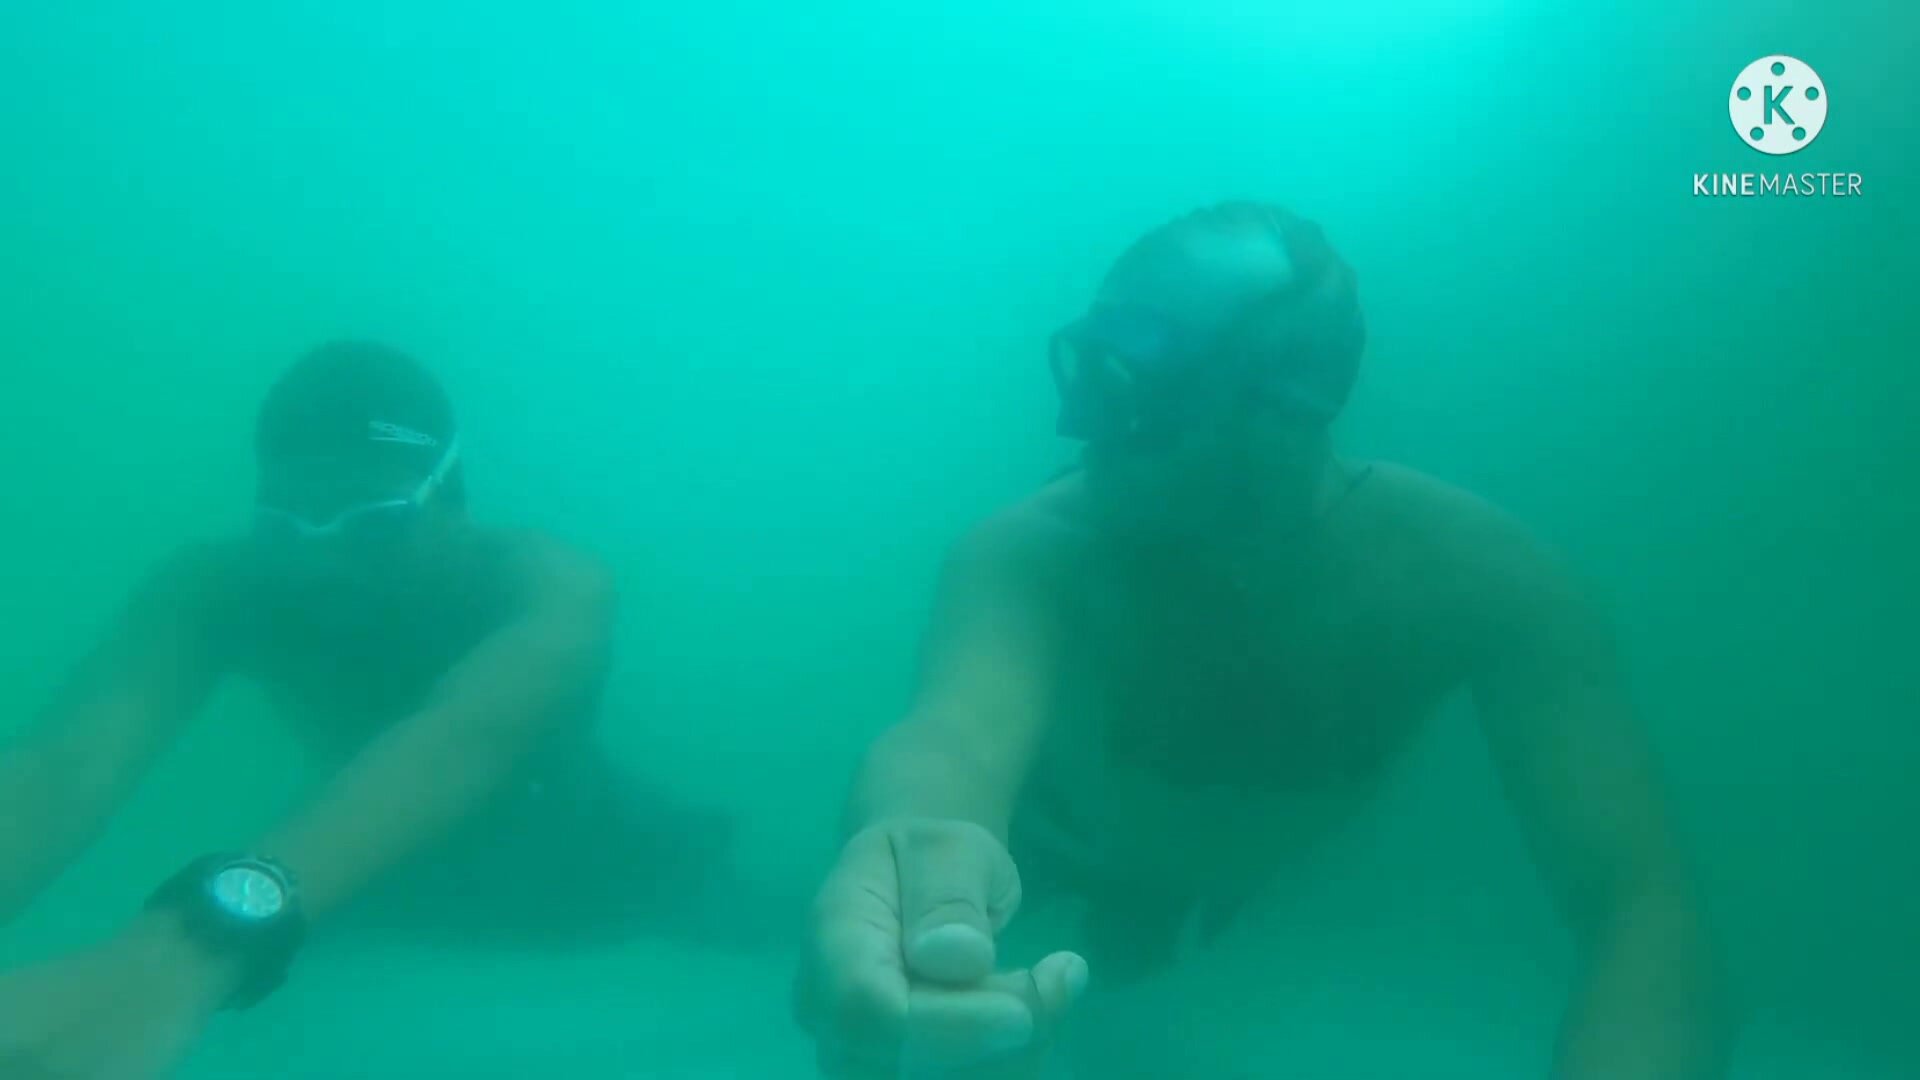 Kareem and friend dynamic breathold underwater